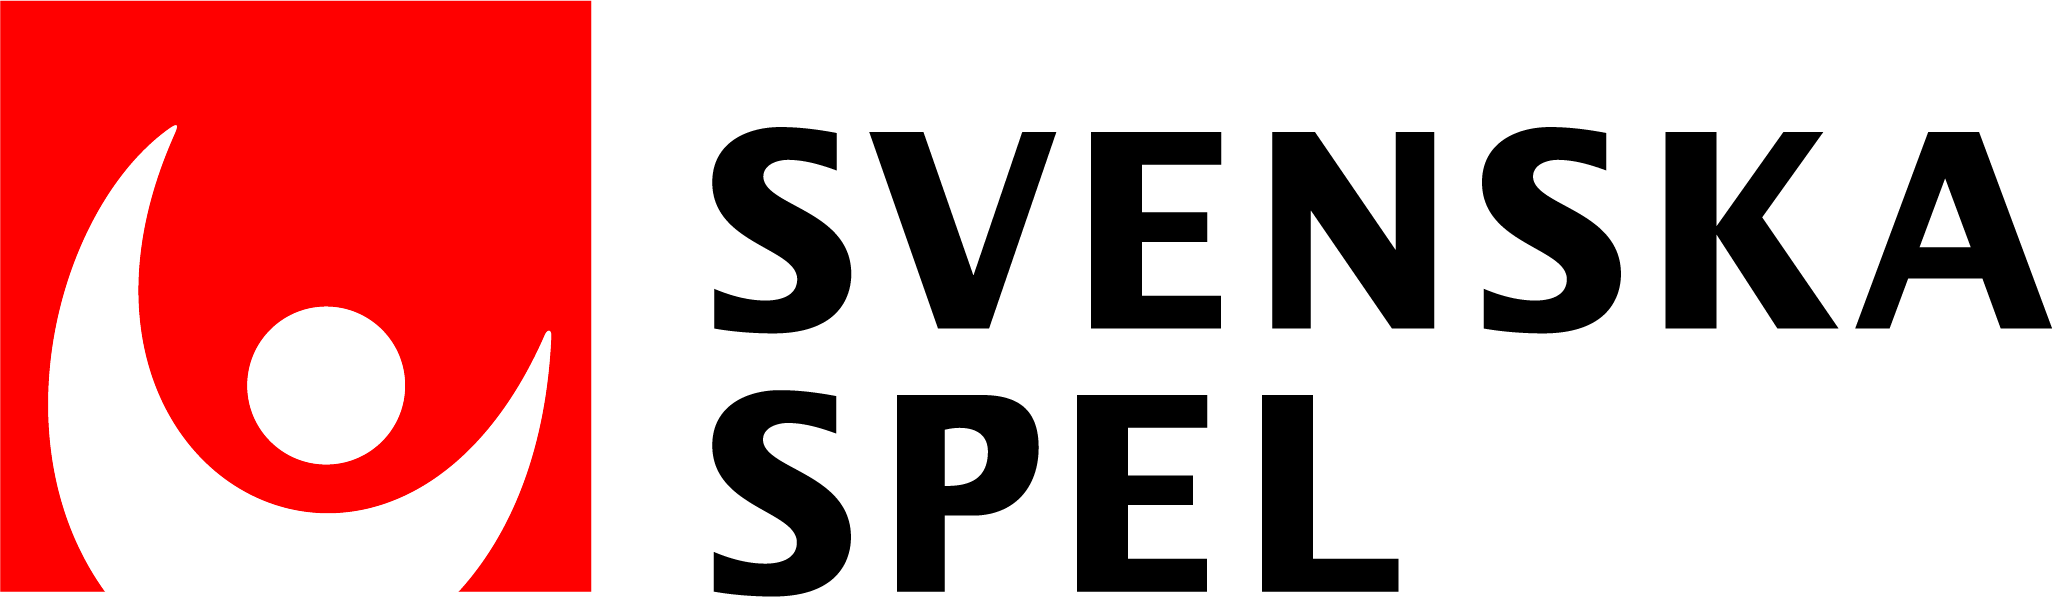 Svenska_Spel_kundcase_logo